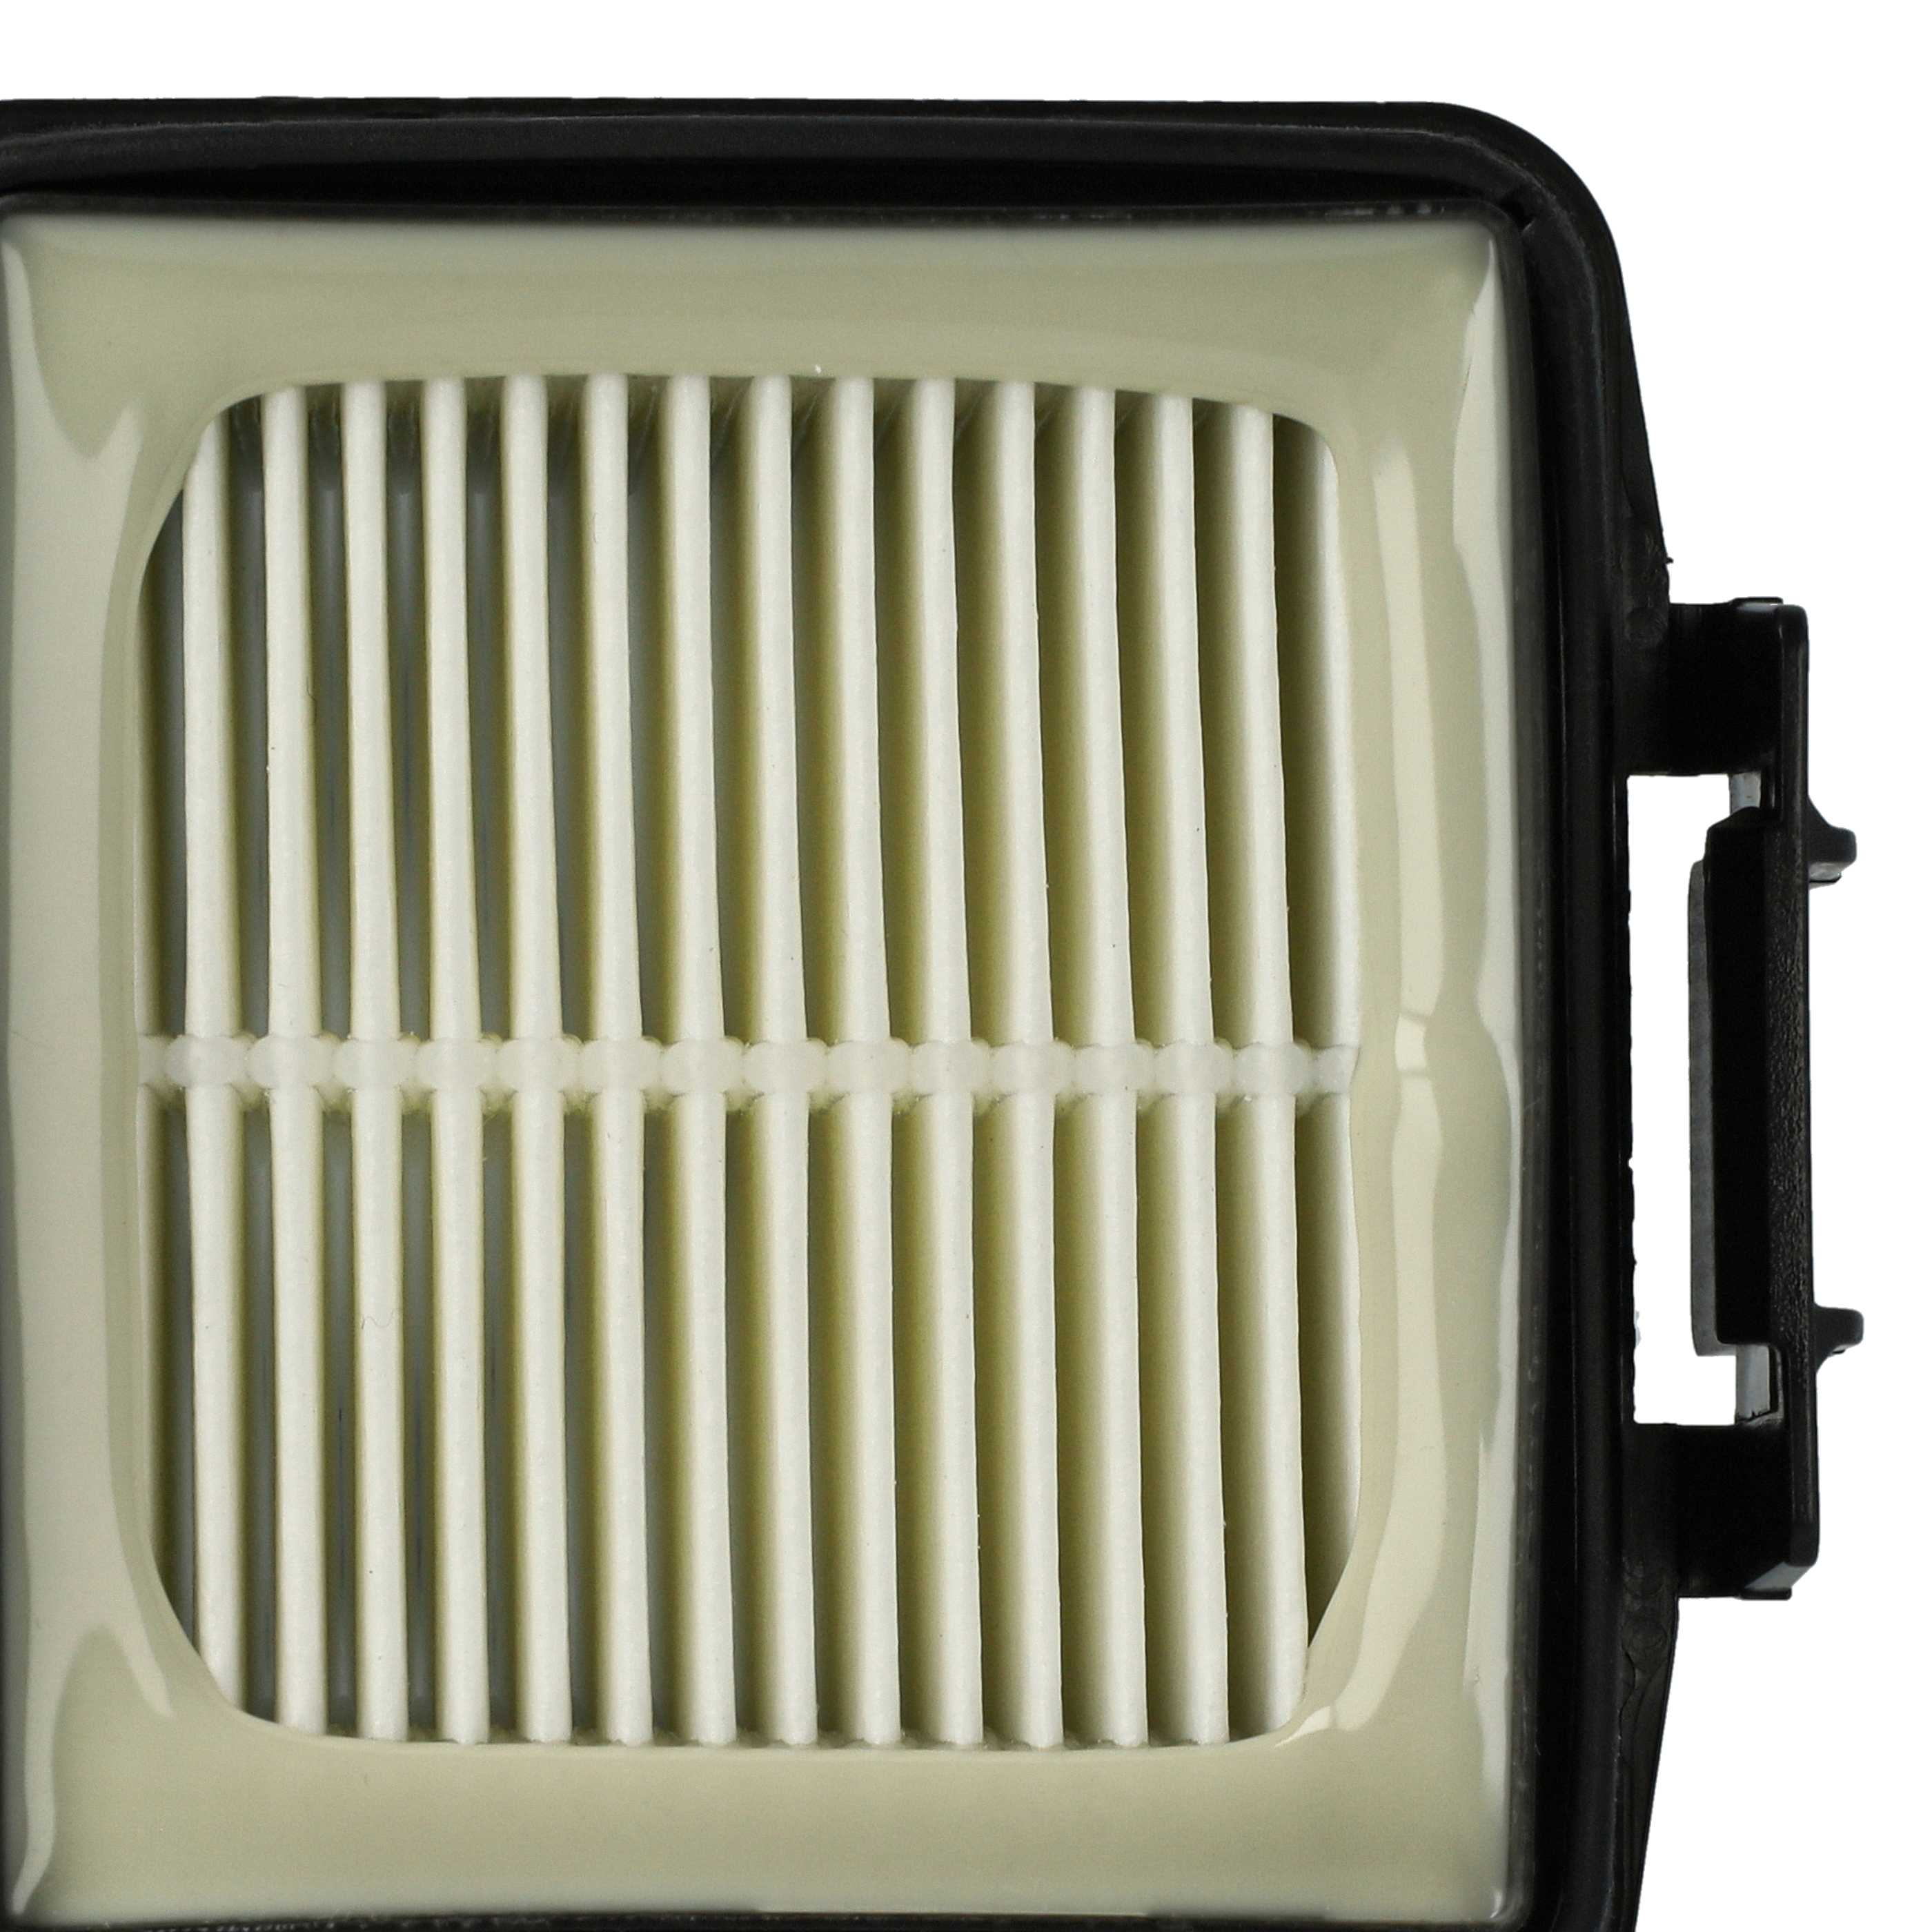 1x HEPA filter replaces Kärcher 2.863-240.0 for Kärcher Vacuum Cleaner, filter class HEPA